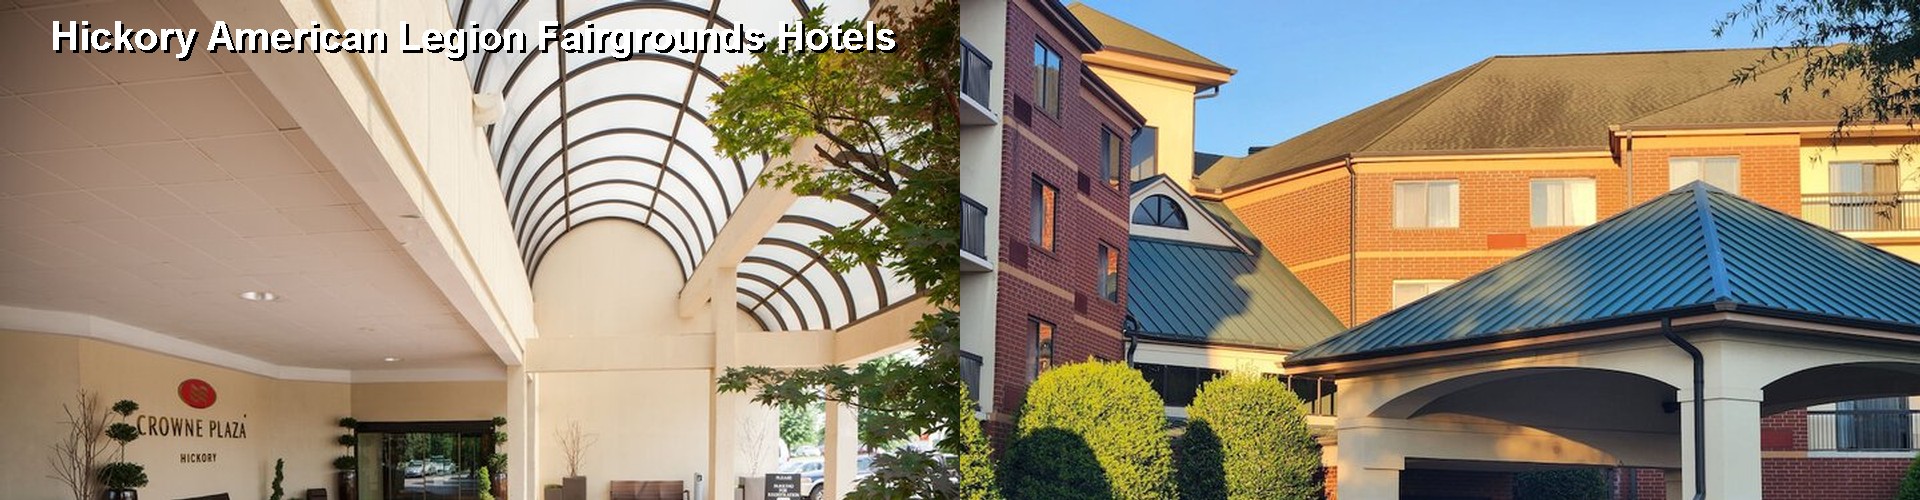 5 Best Hotels near Hickory American Legion Fairgrounds